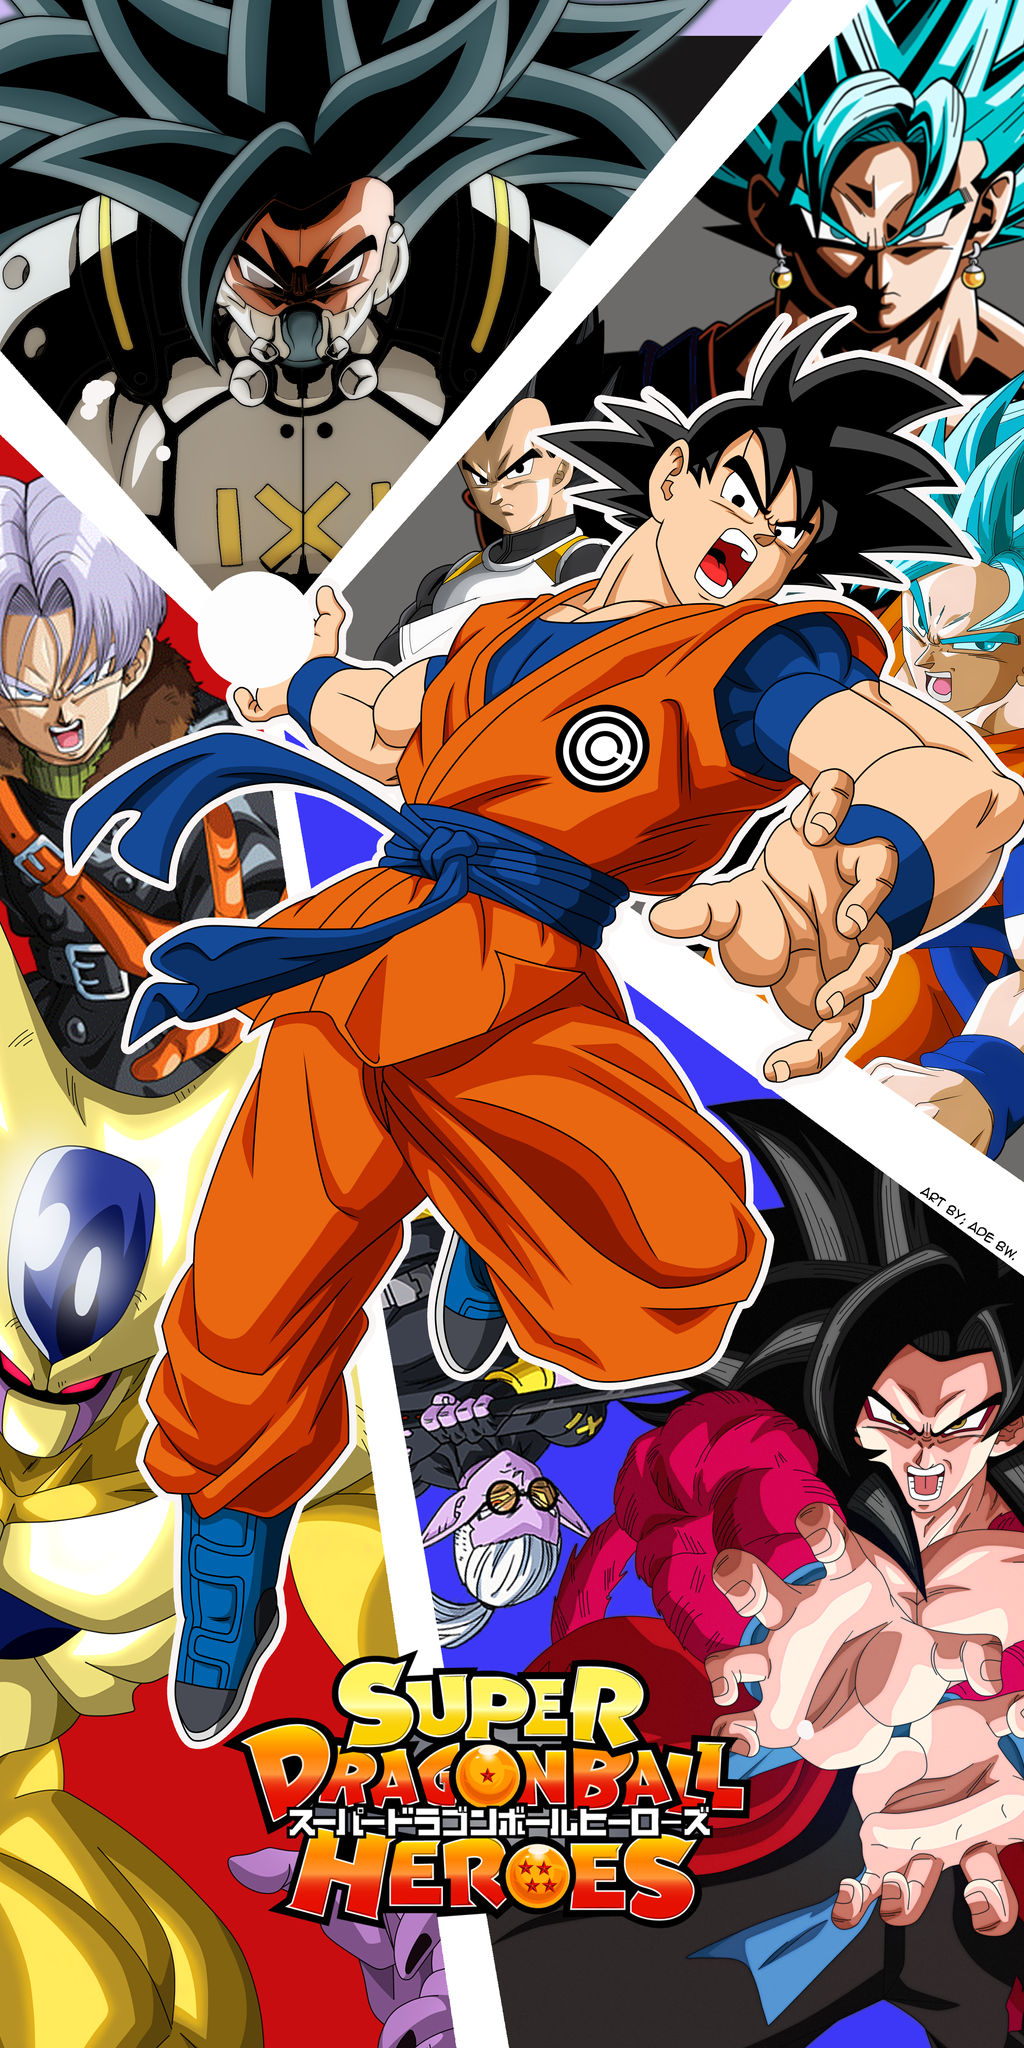 Dragon Ball Super - Super Hero Poster by obsolete00 on DeviantArt